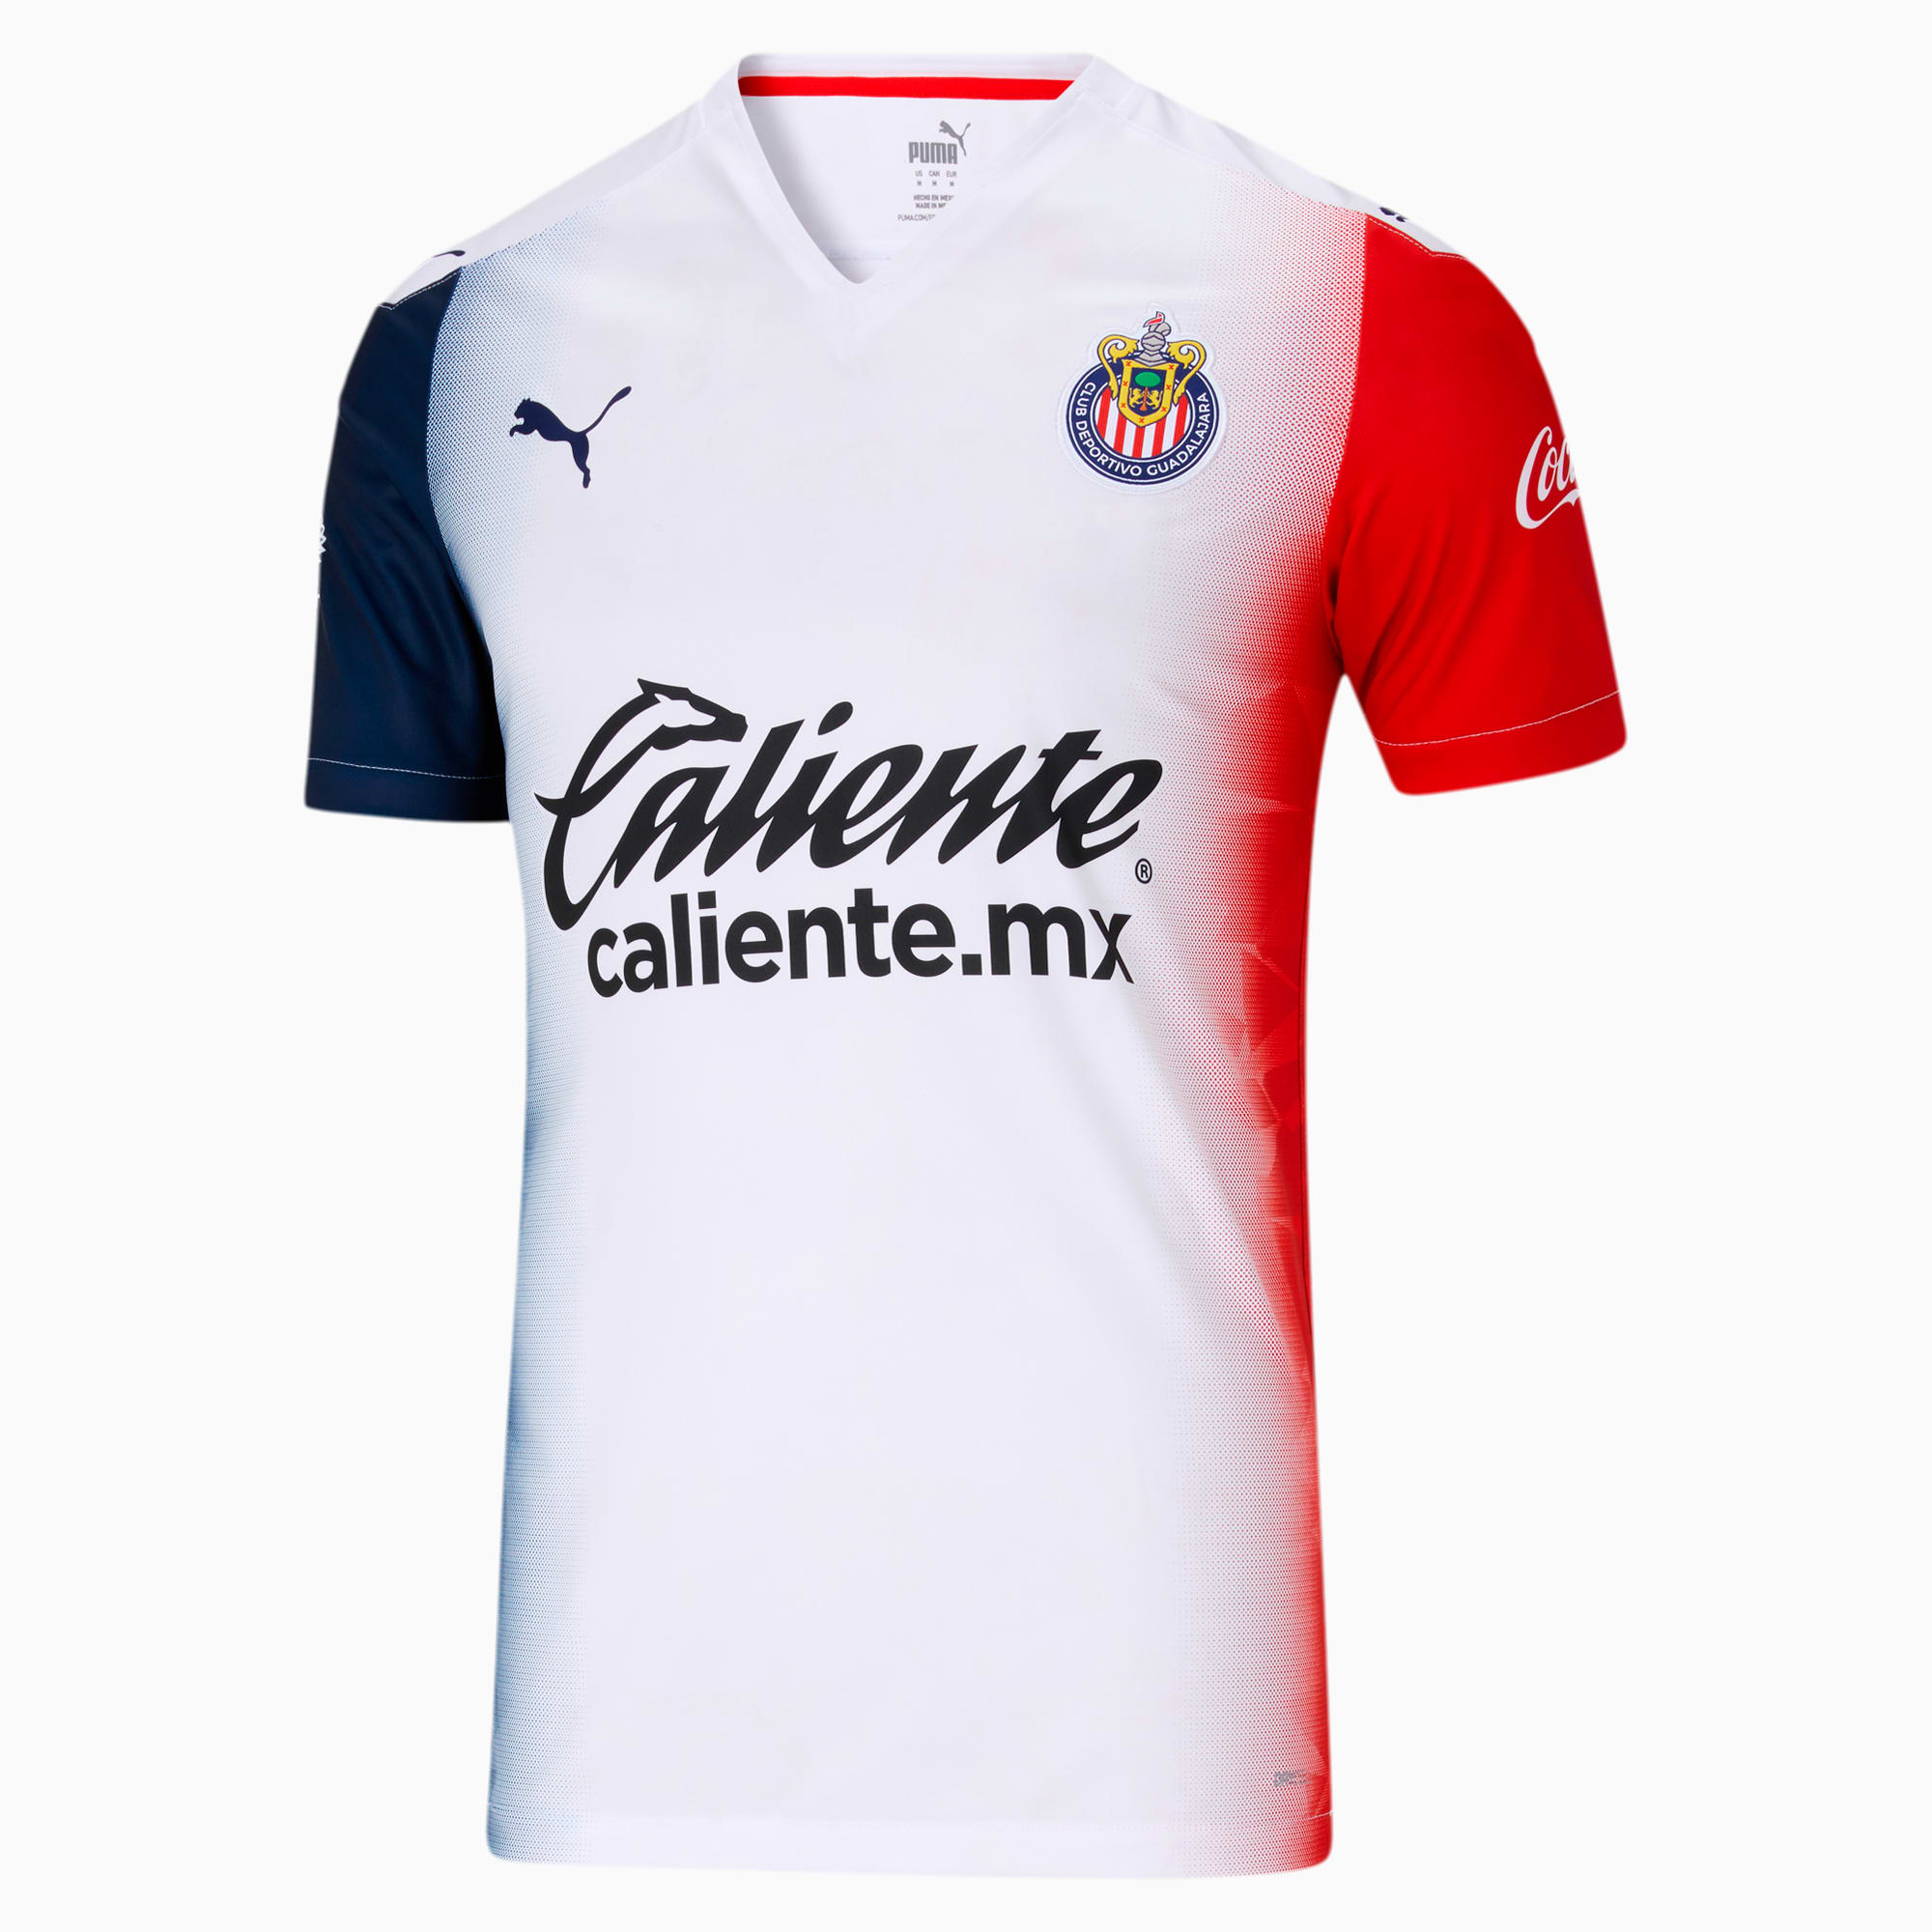 Chivas 2020/21 Men's Away Replica Shirt 